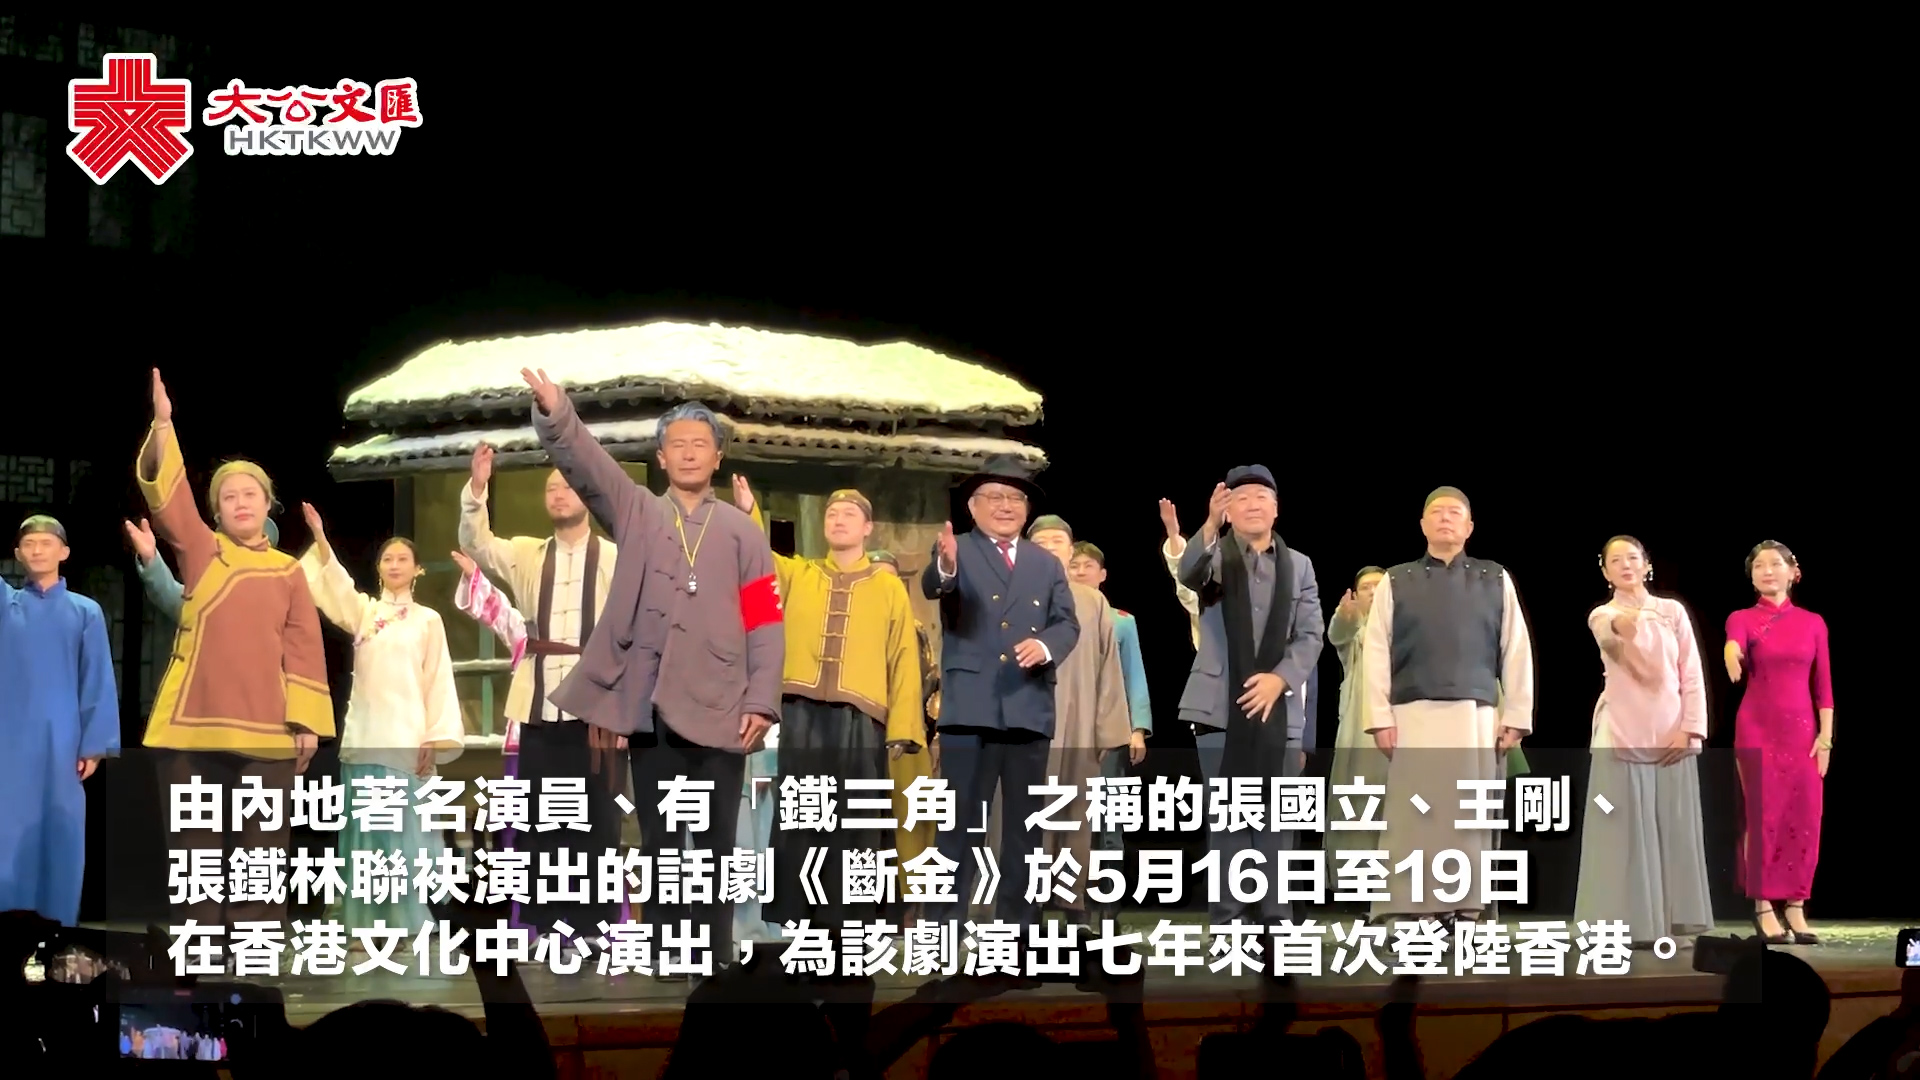  "Iron Triangle" Landing in Hong Kong with "Breaking Gold" Zhang Guoli: Hong Kong Audience Surprisingly Enthusiastic